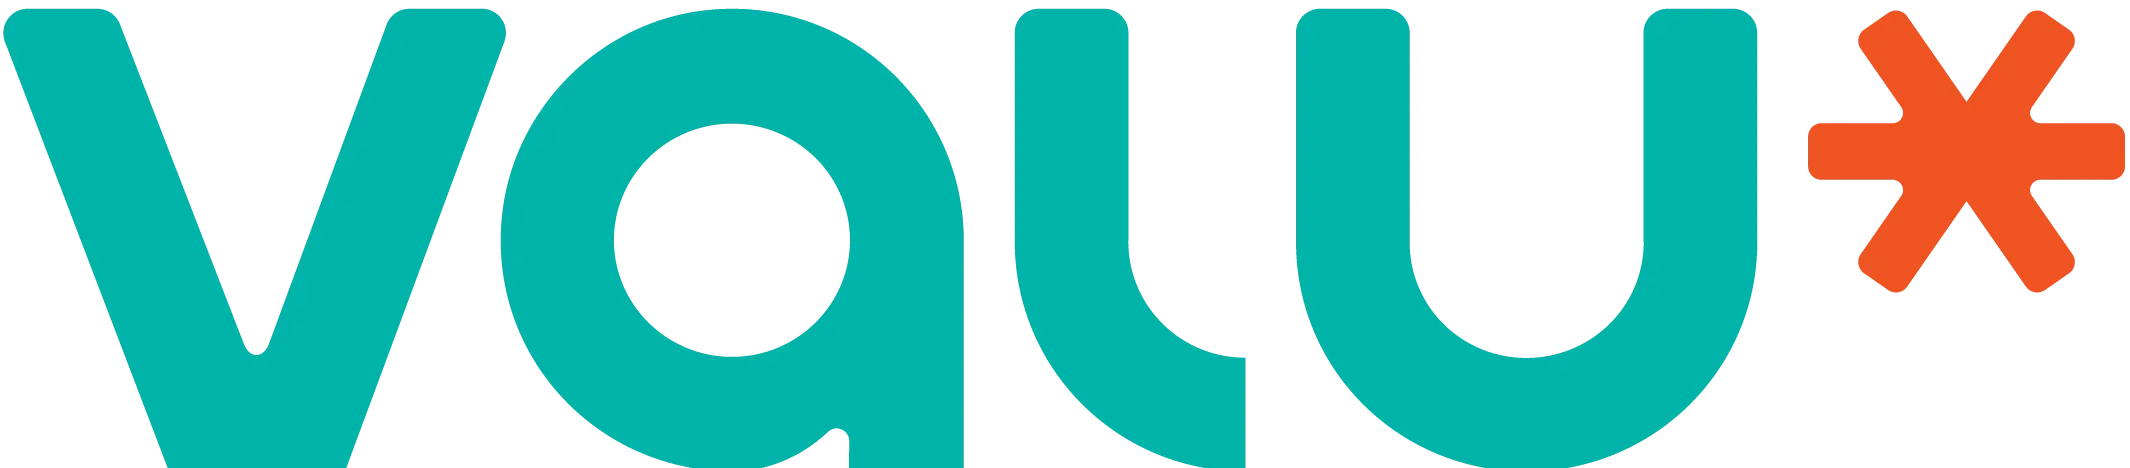 valu new logo